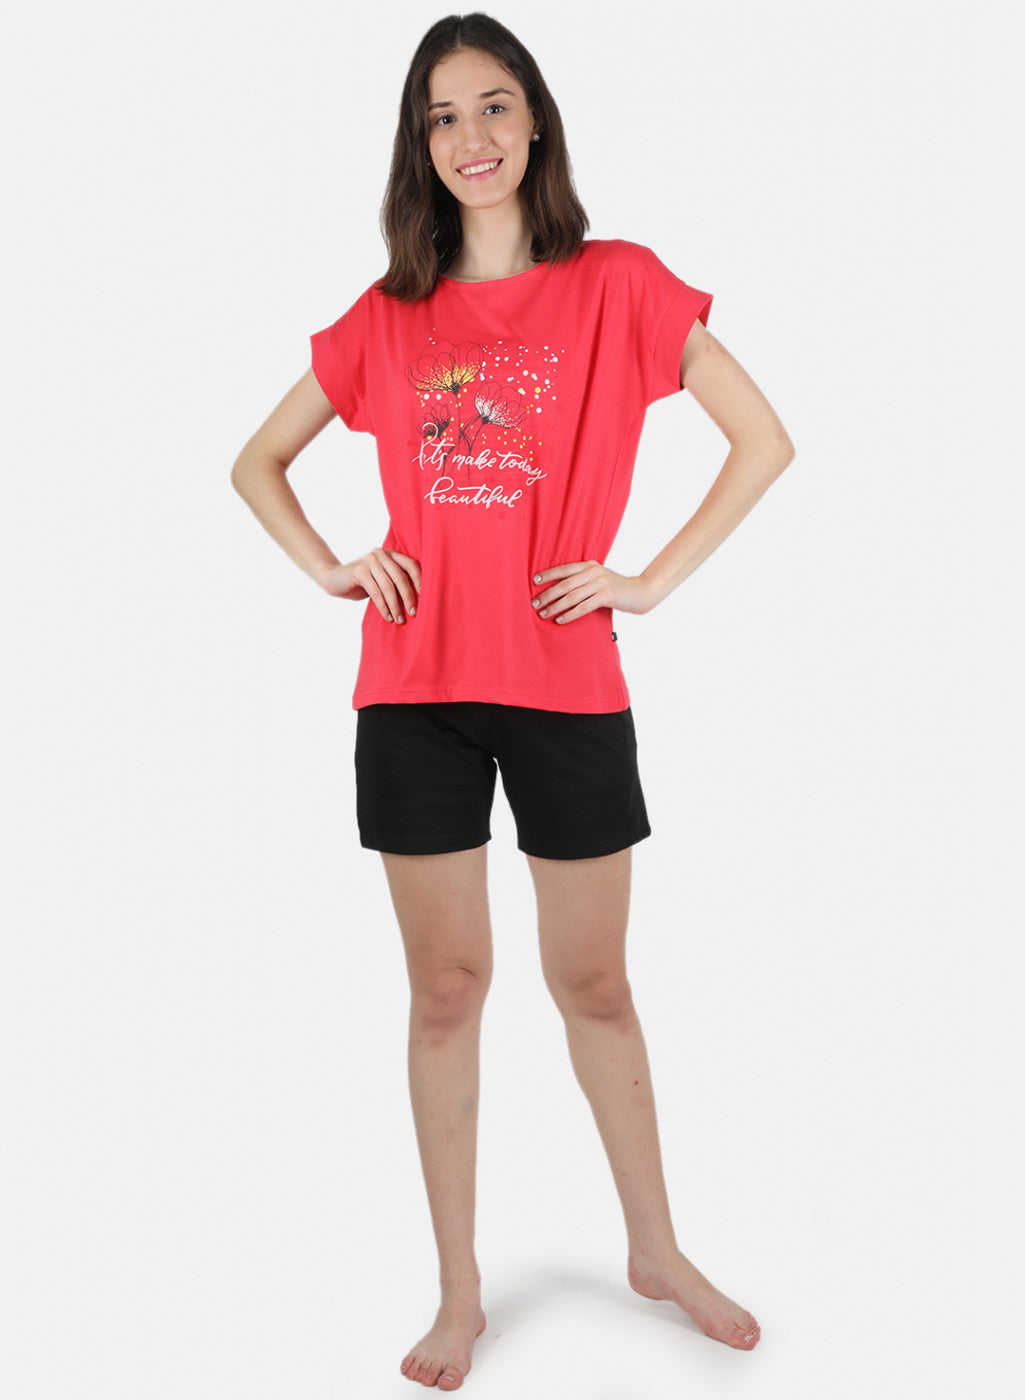 Women Mini Shorts - Buy Women Mini Shorts online in India